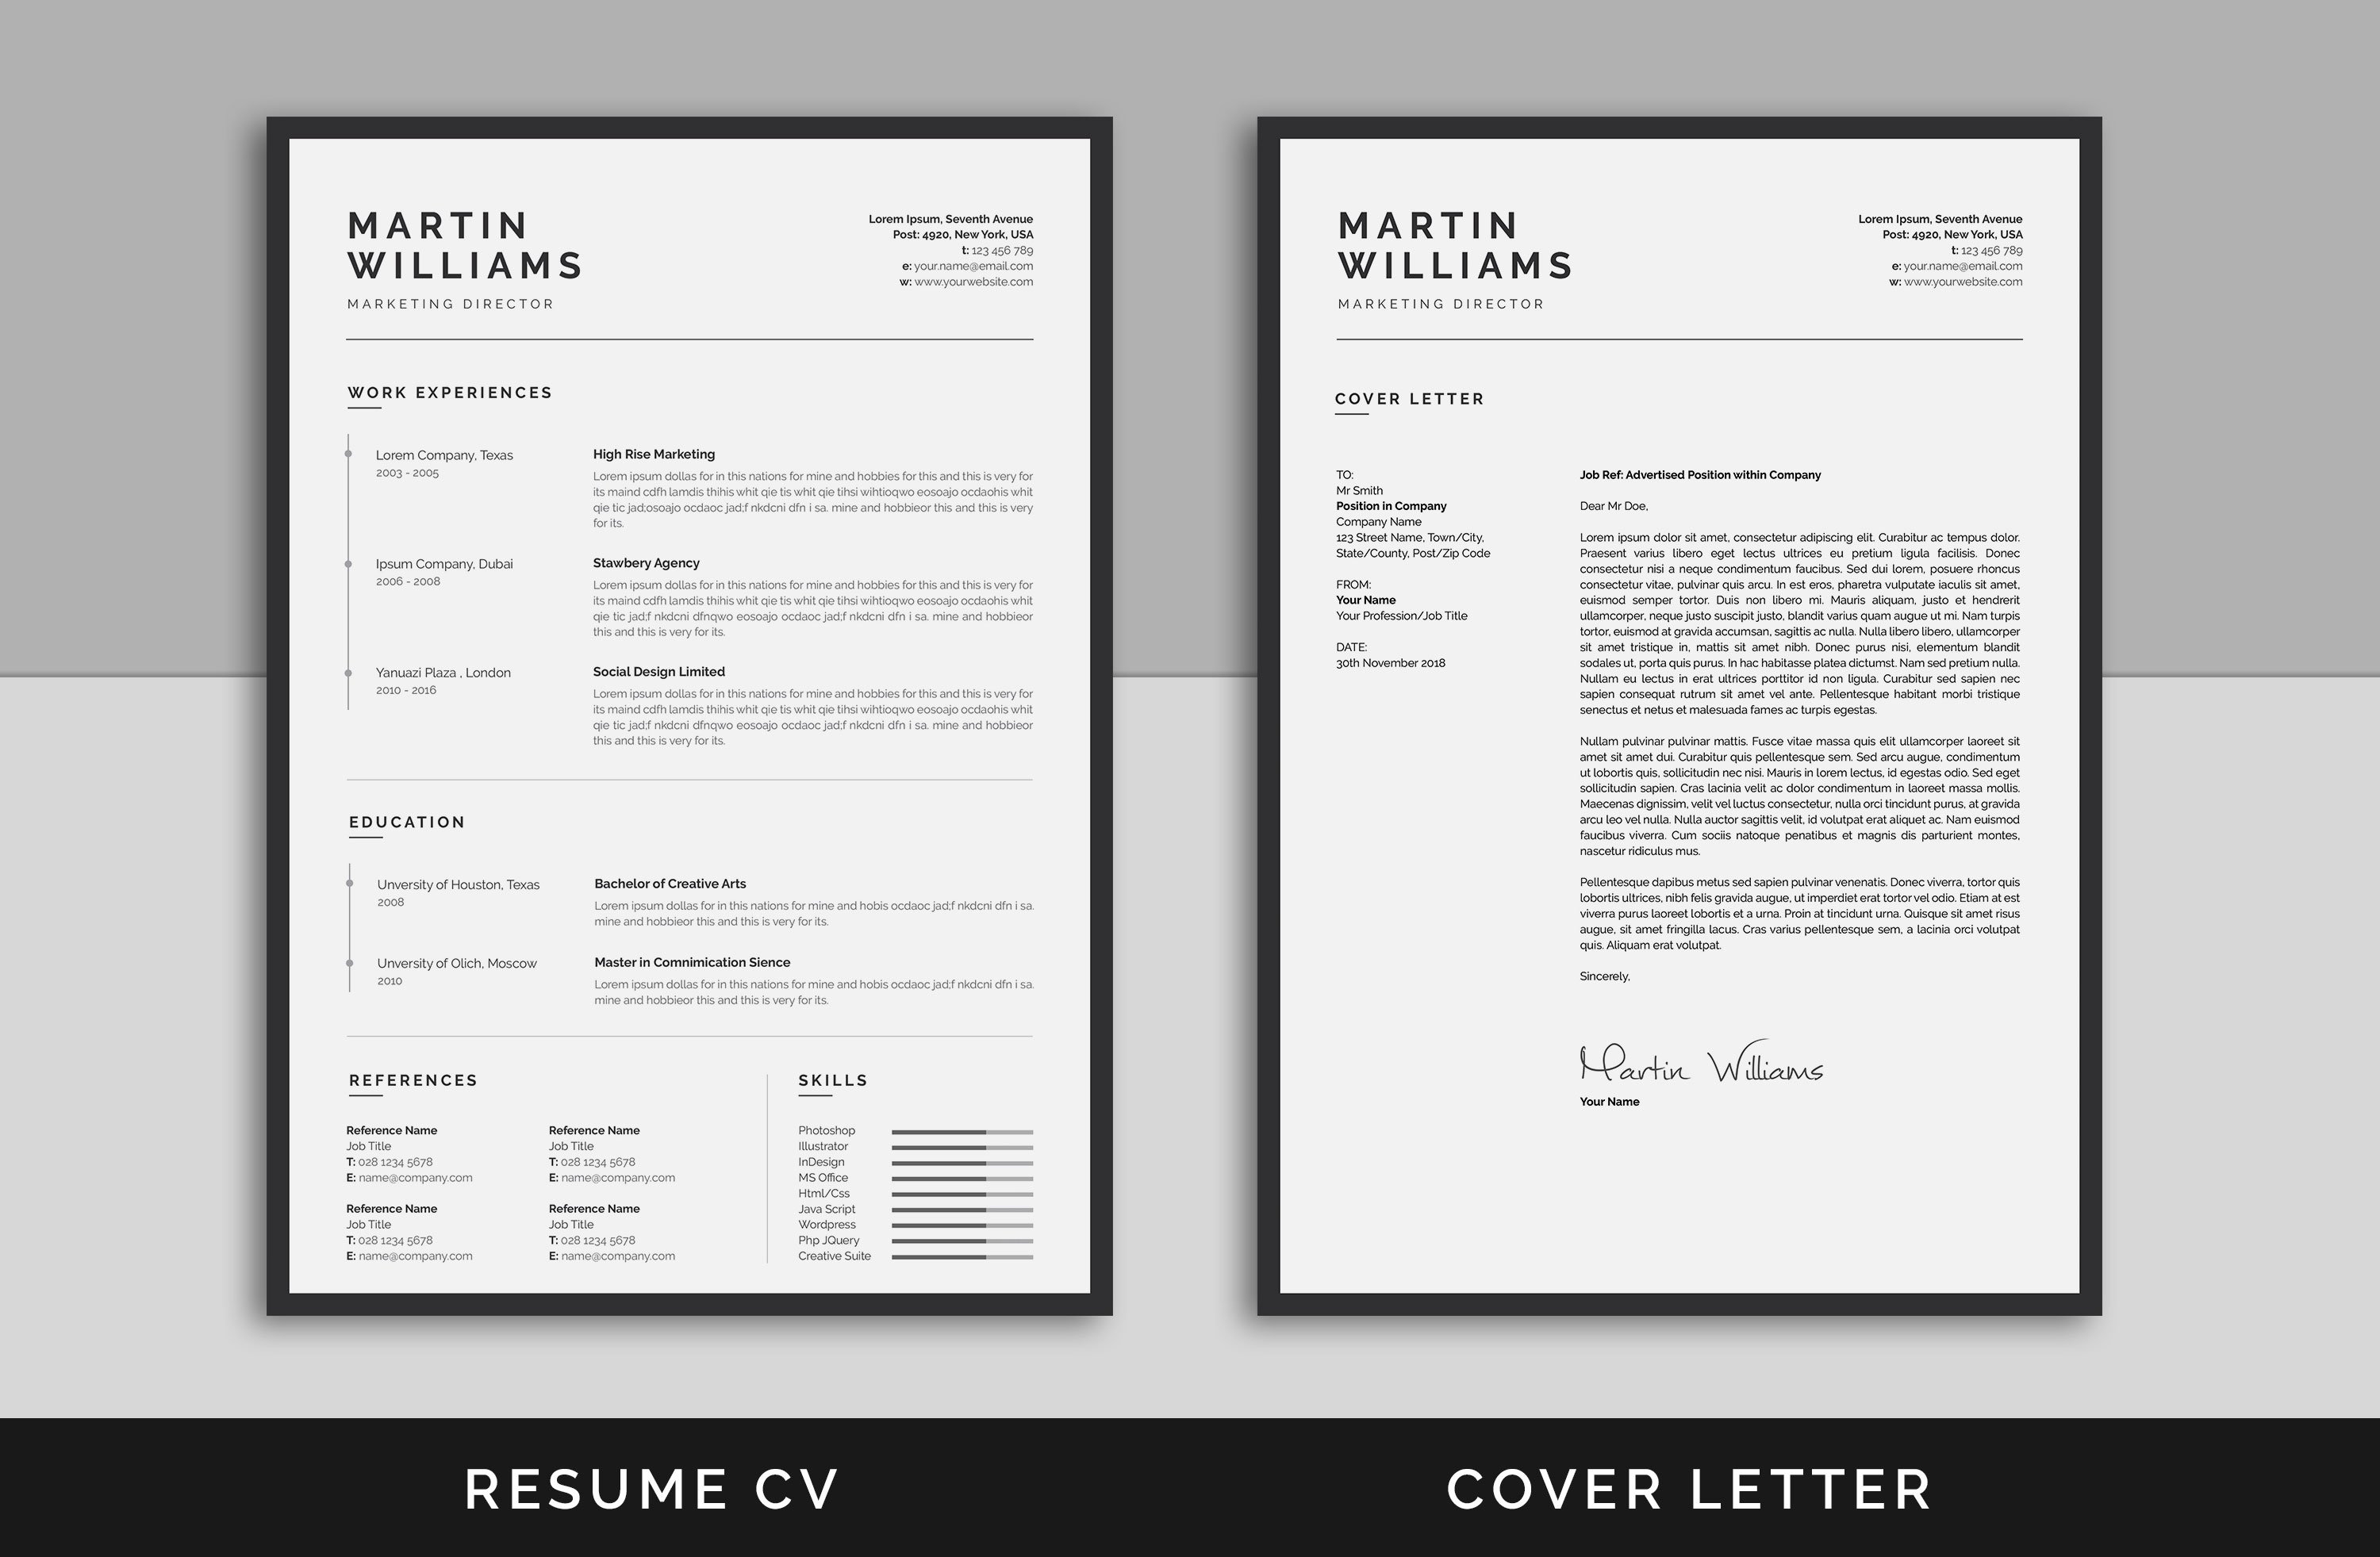 Resume CV preview image.